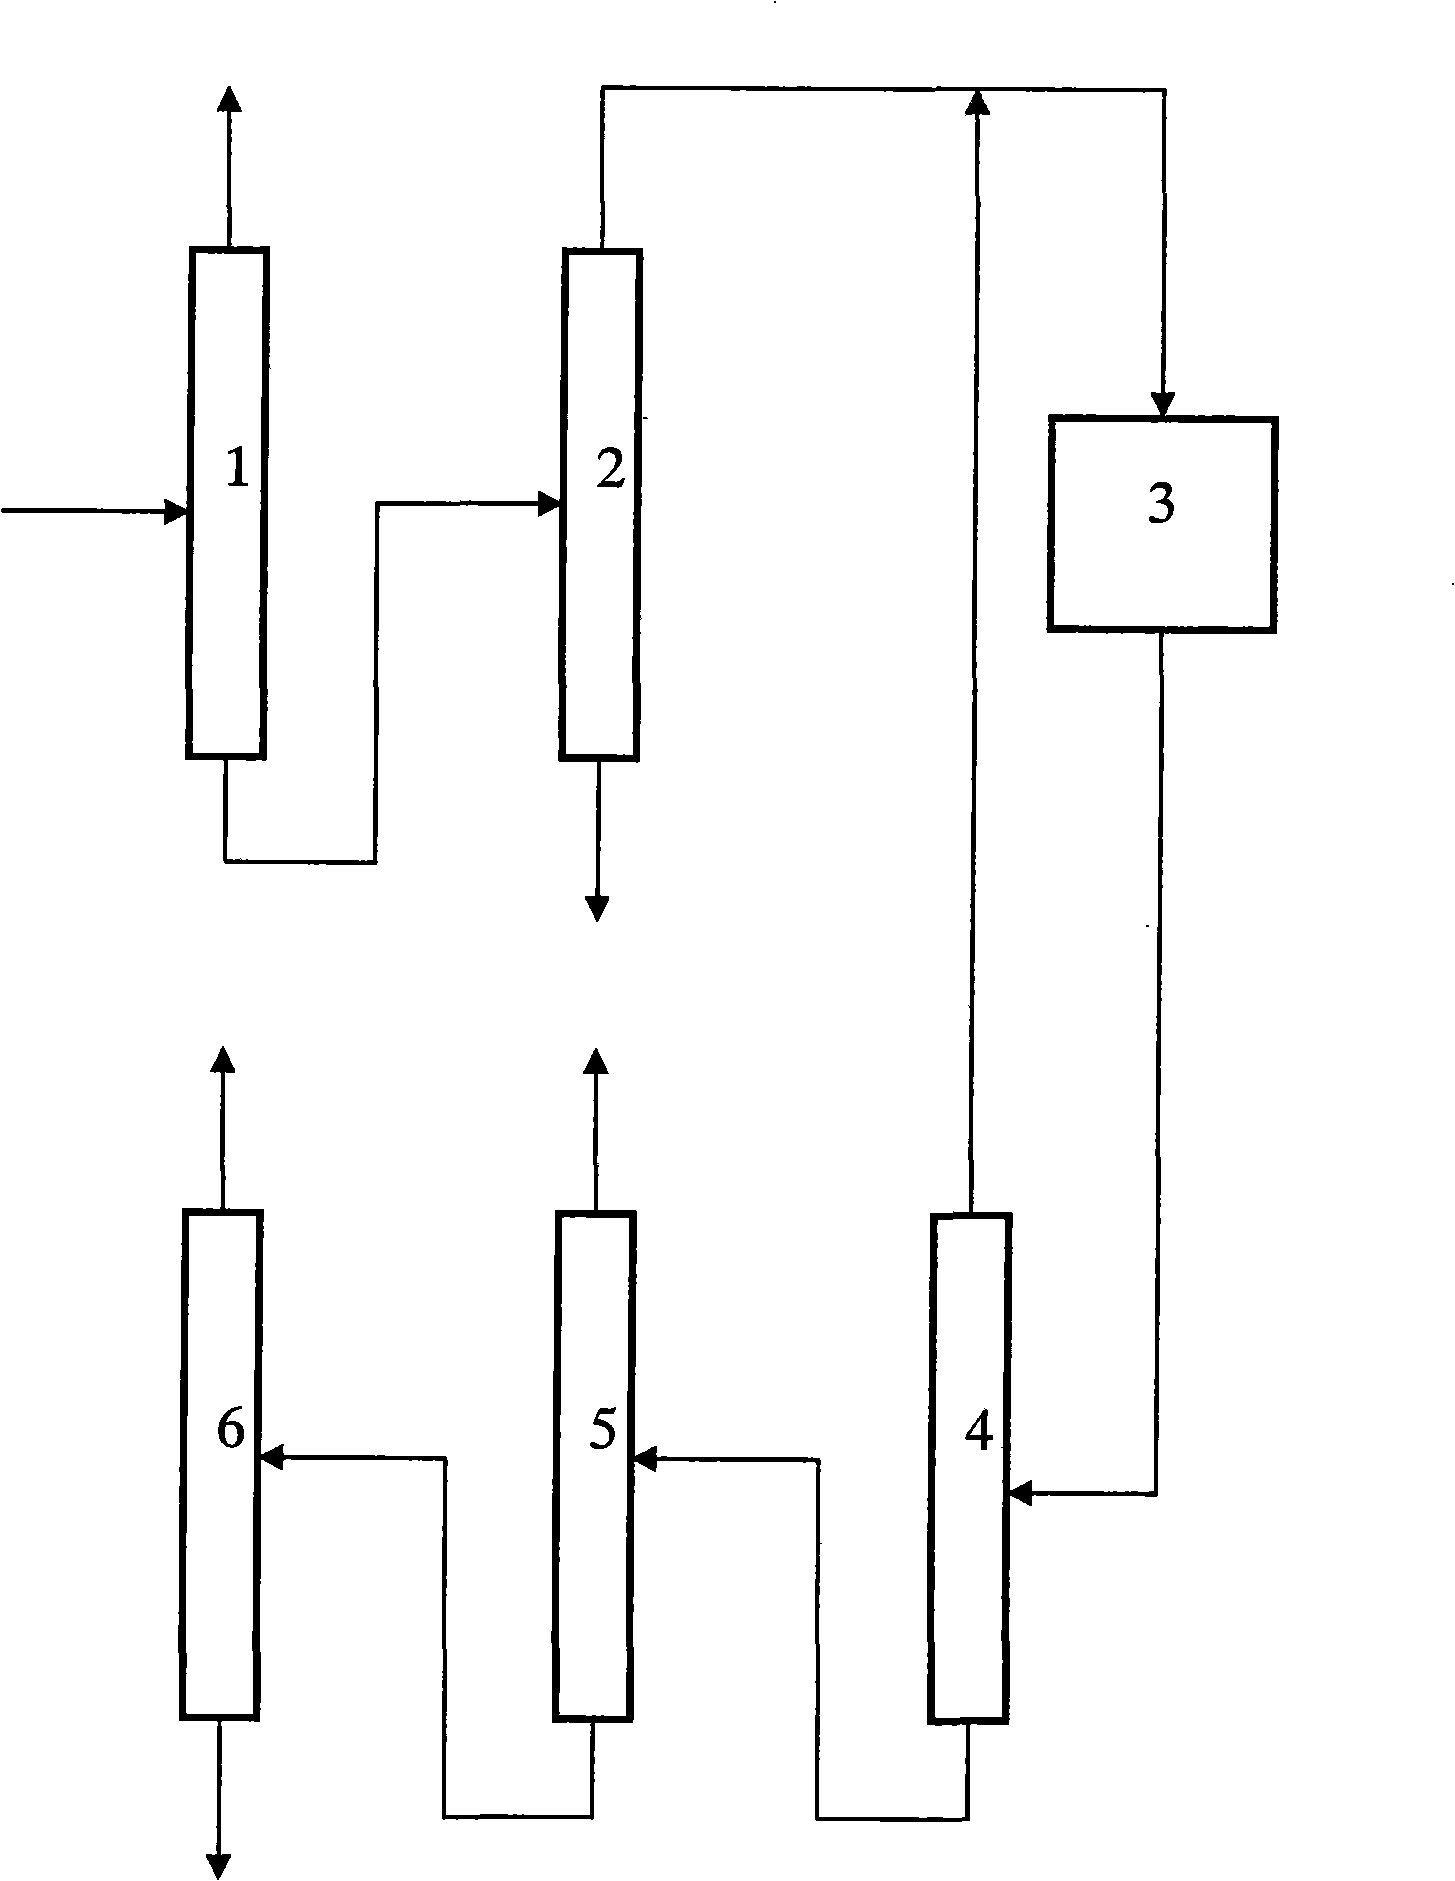 Method for producing 2-tertiary butyl-p-cresol and 6-tertiary butyl-m-cresol